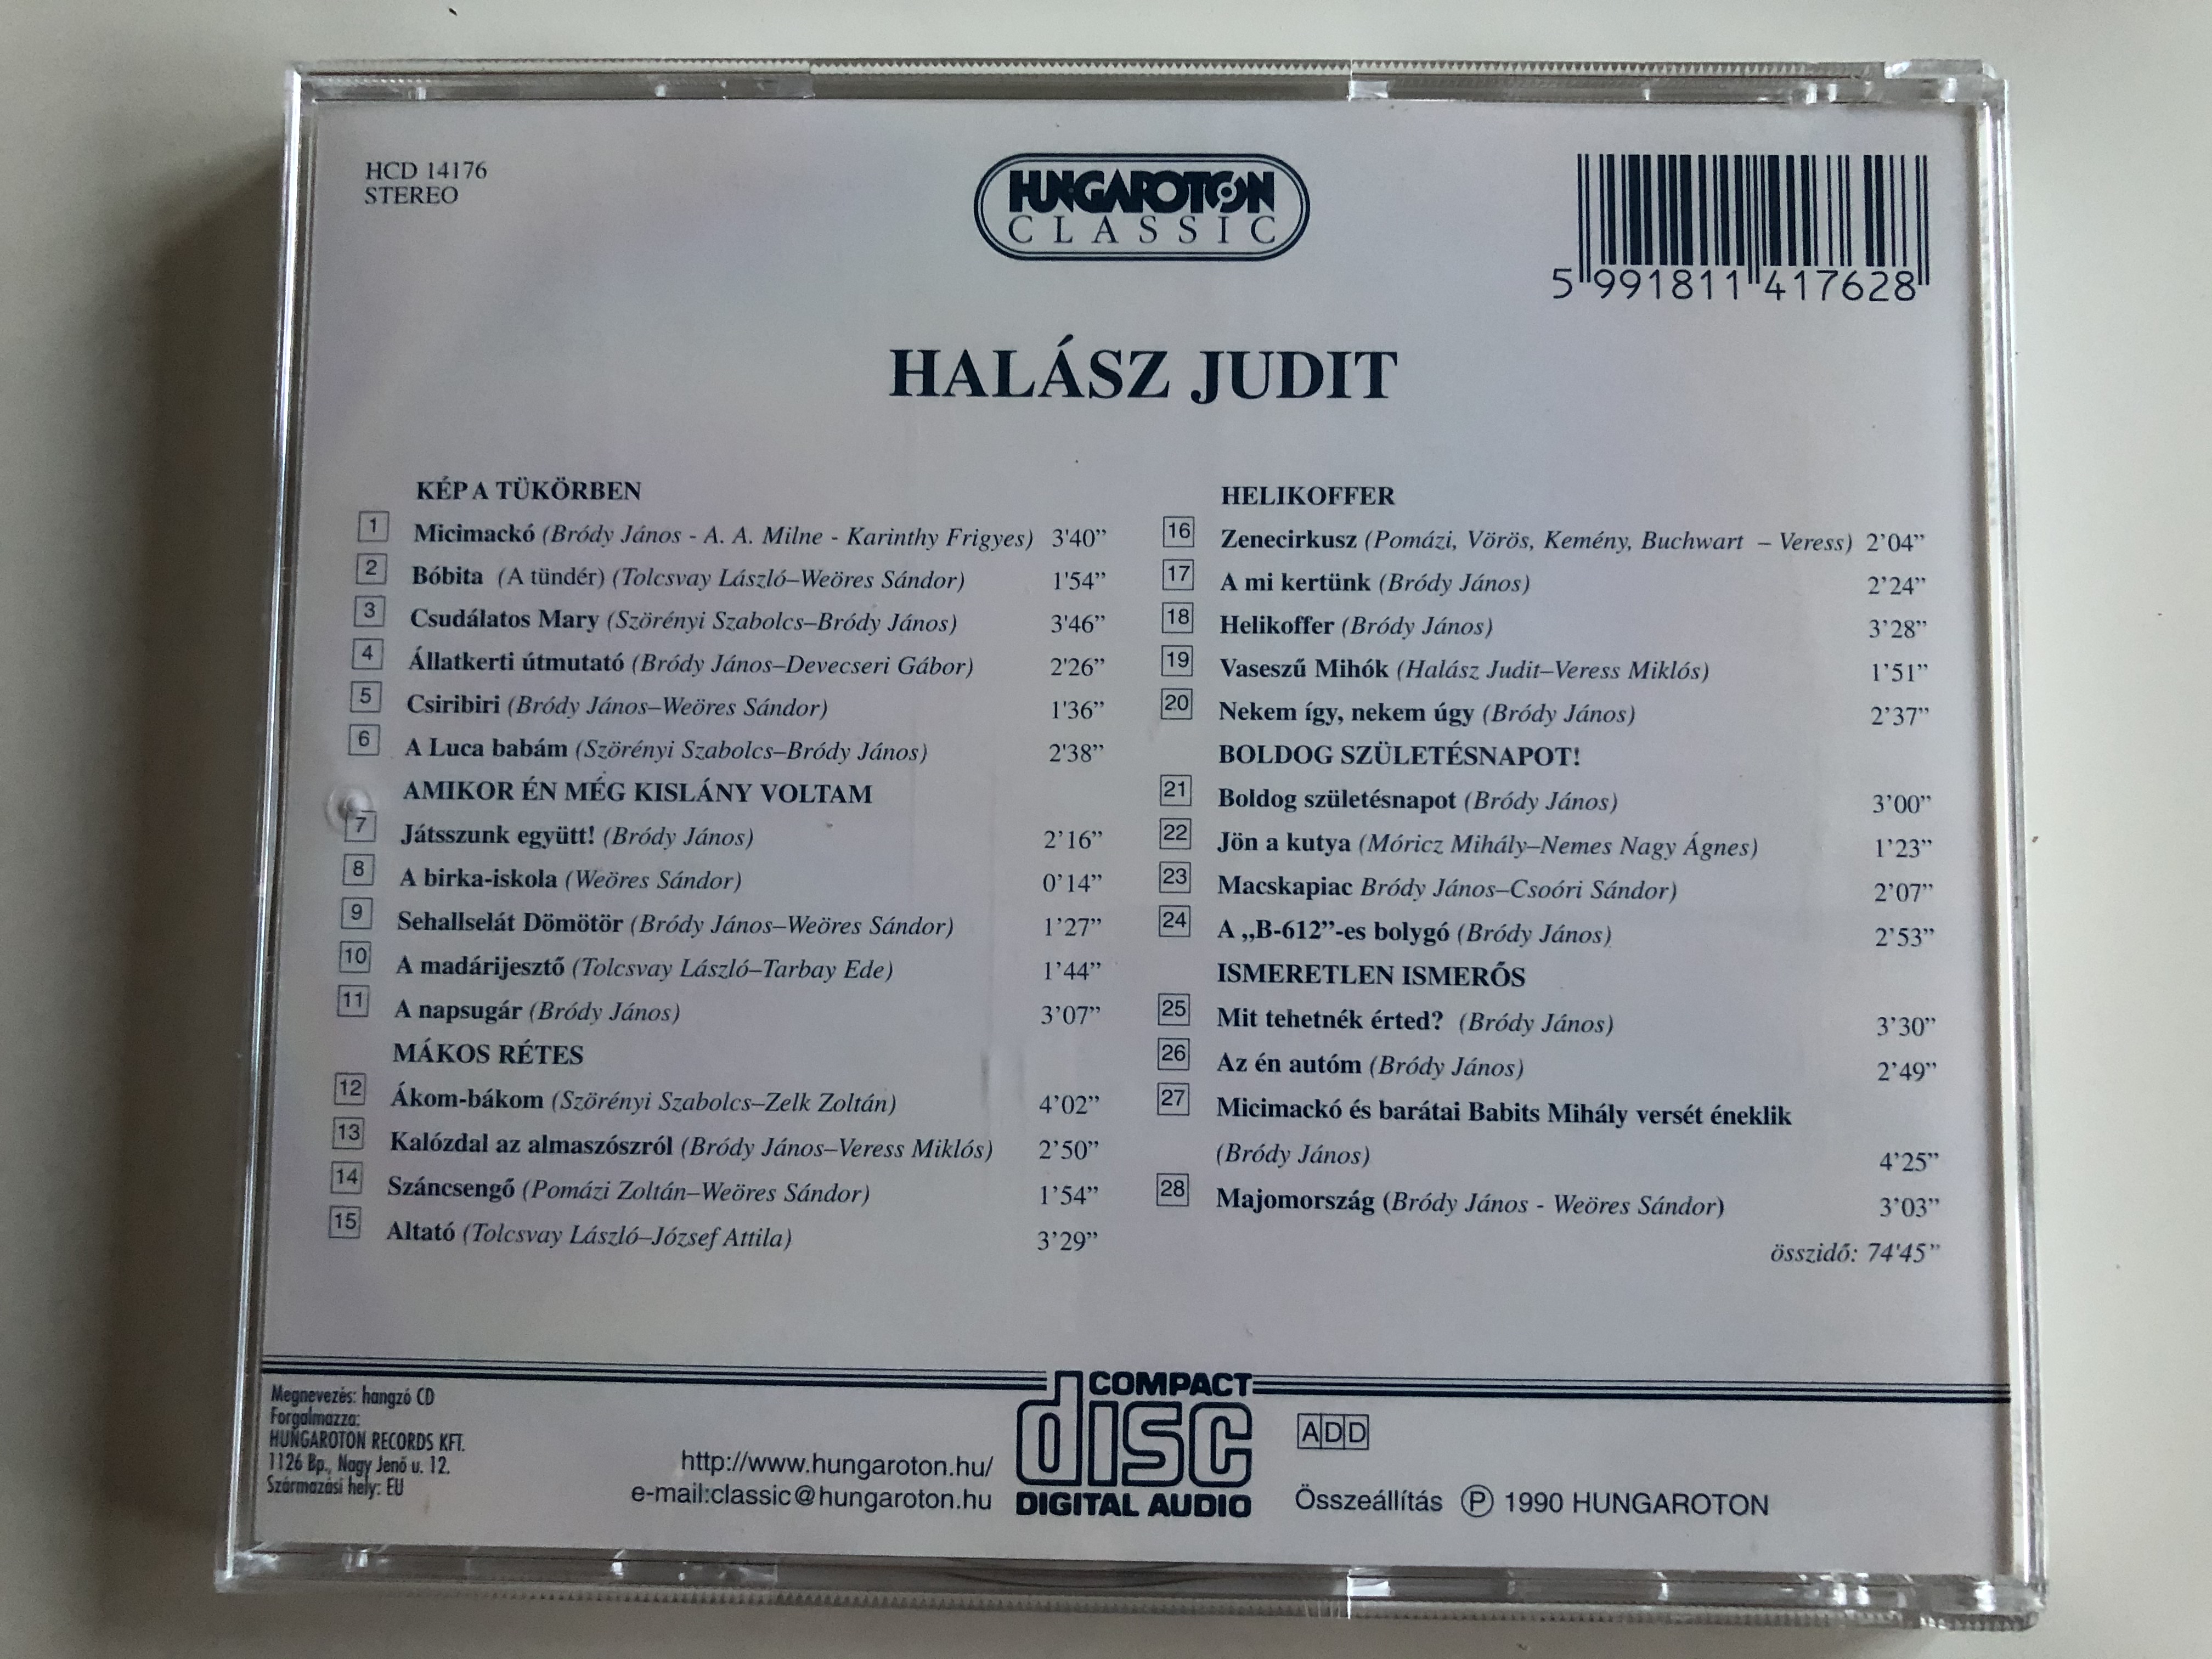 hal-sz-judit-hungaroton-classic-audio-cd-1994-stereo-hcd-14176-7-.jpg